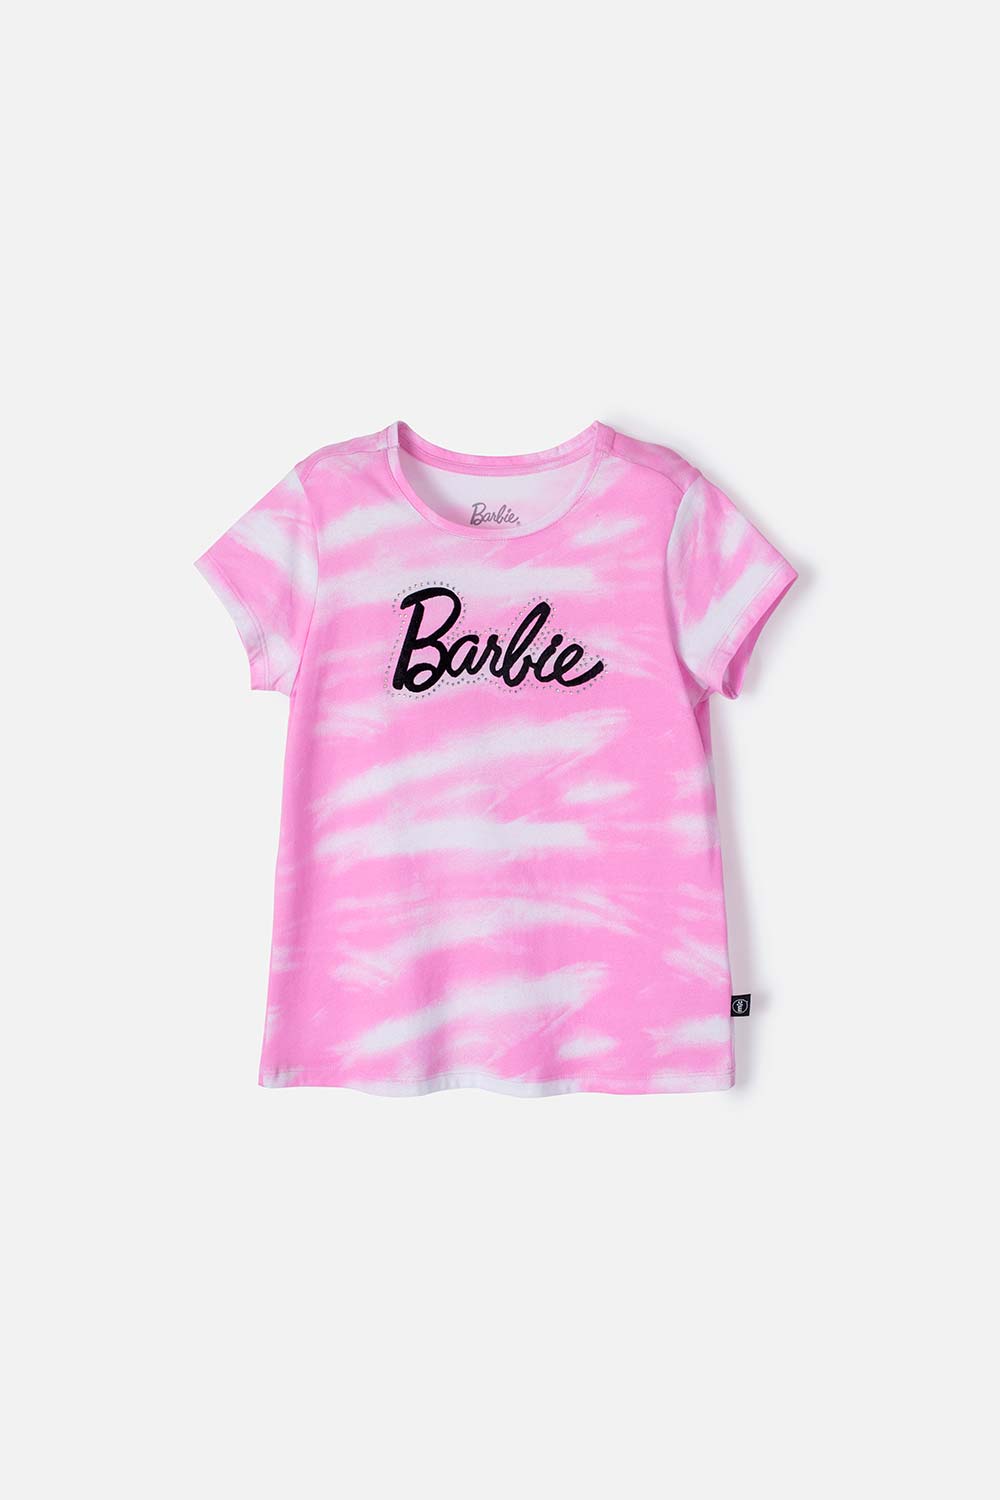 Camiseta de Barbie rosada manga corta para niña 4-0